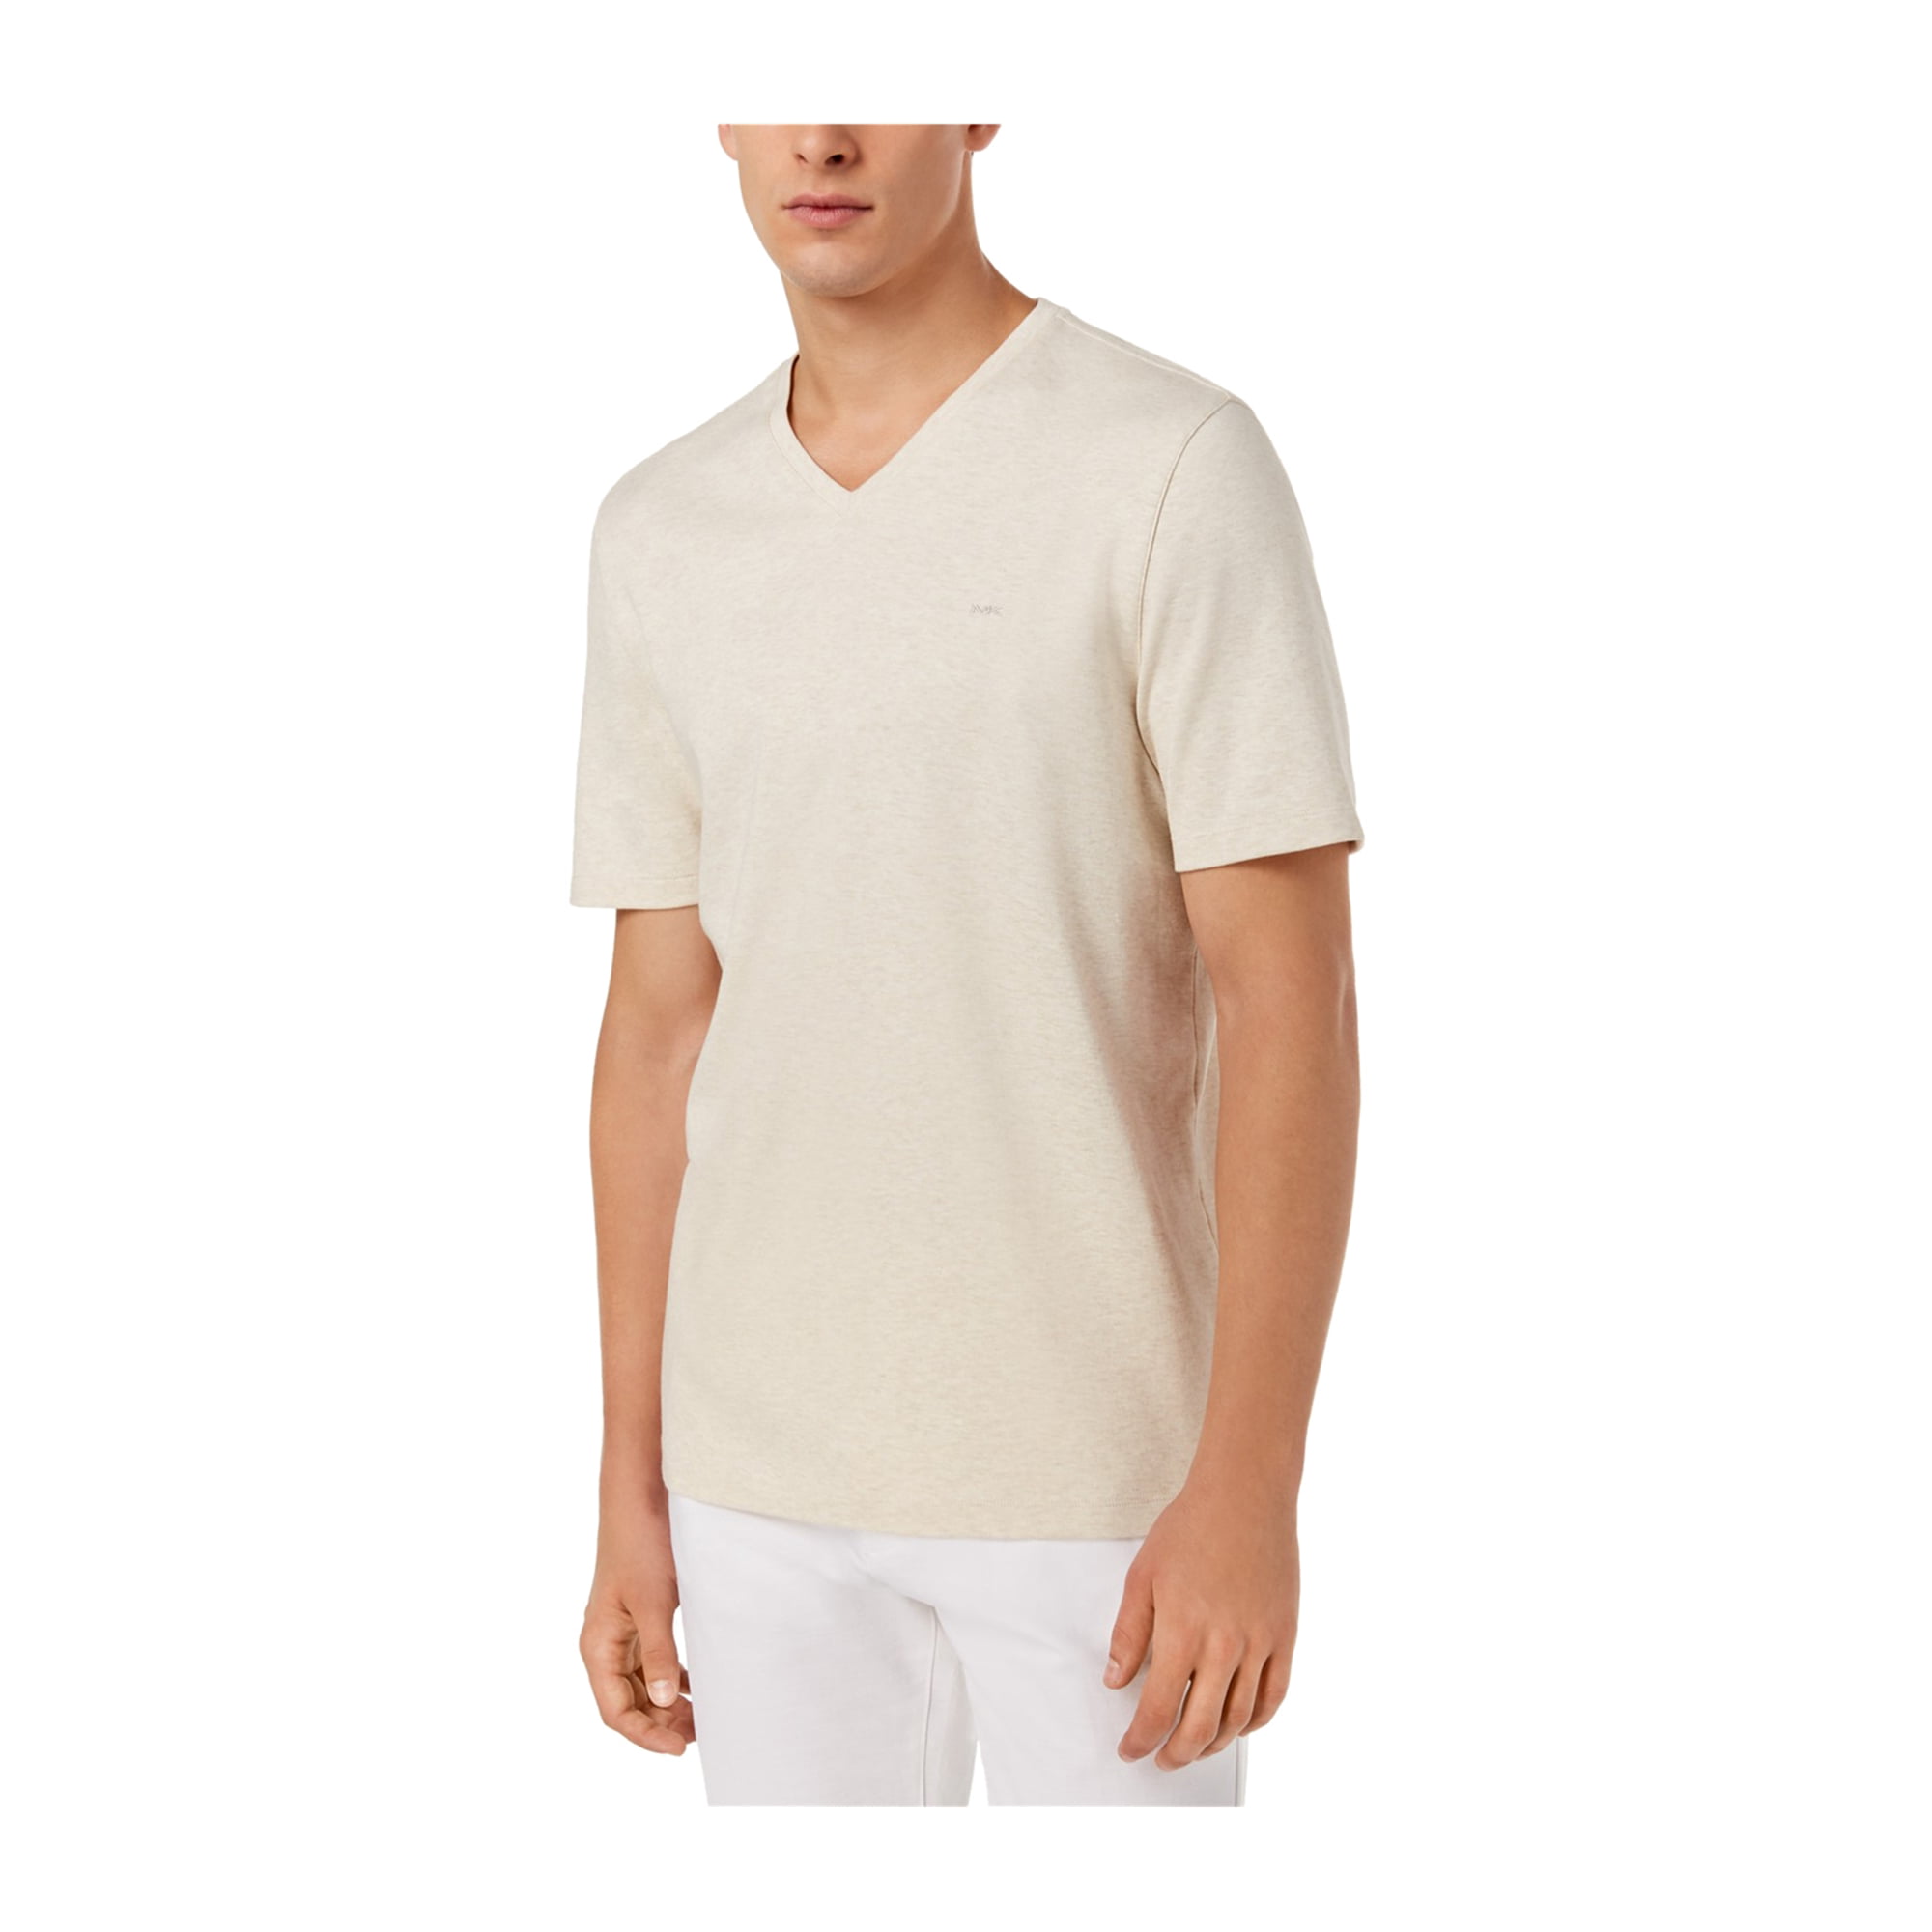 Michael Kors Mens V-Neck Basic T-Shirt almondmel S | Walmart Canada